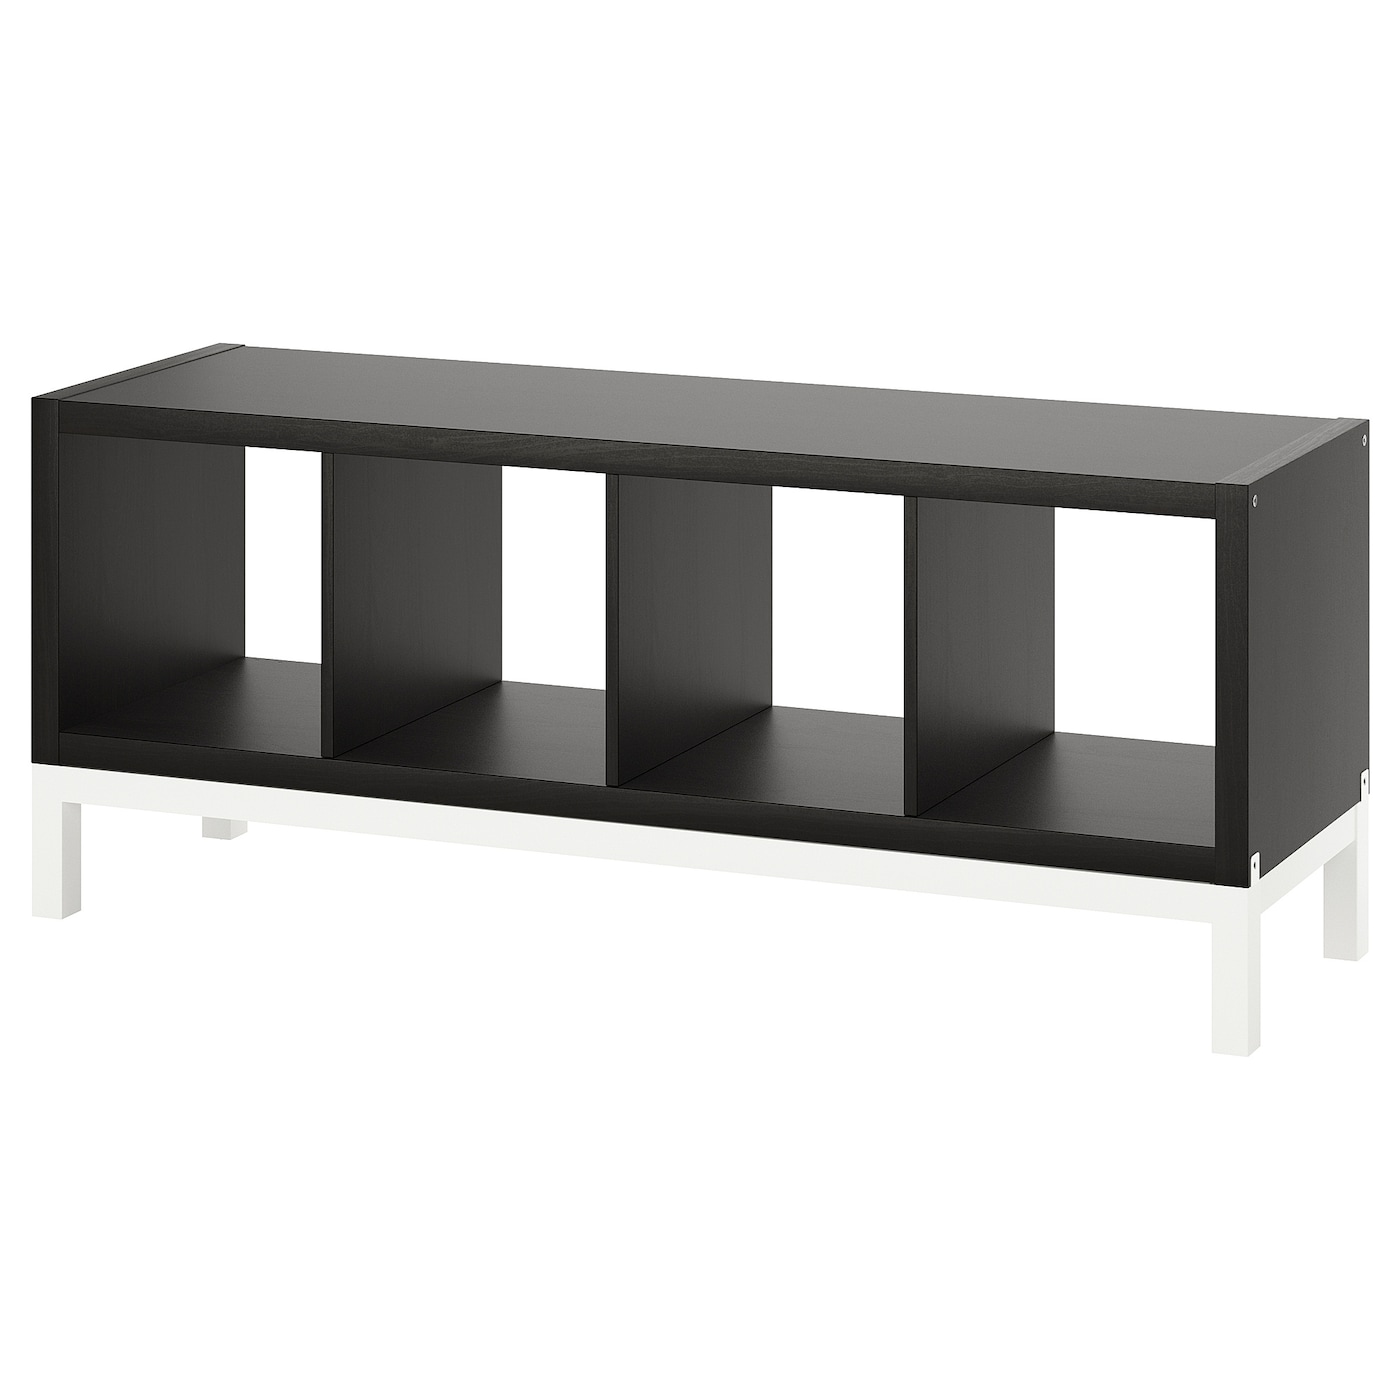 Стеллаж - IKEA KALLAX, 147х39х59 см, черно-коричневый/белый, КАЛЛАКС ИКЕА